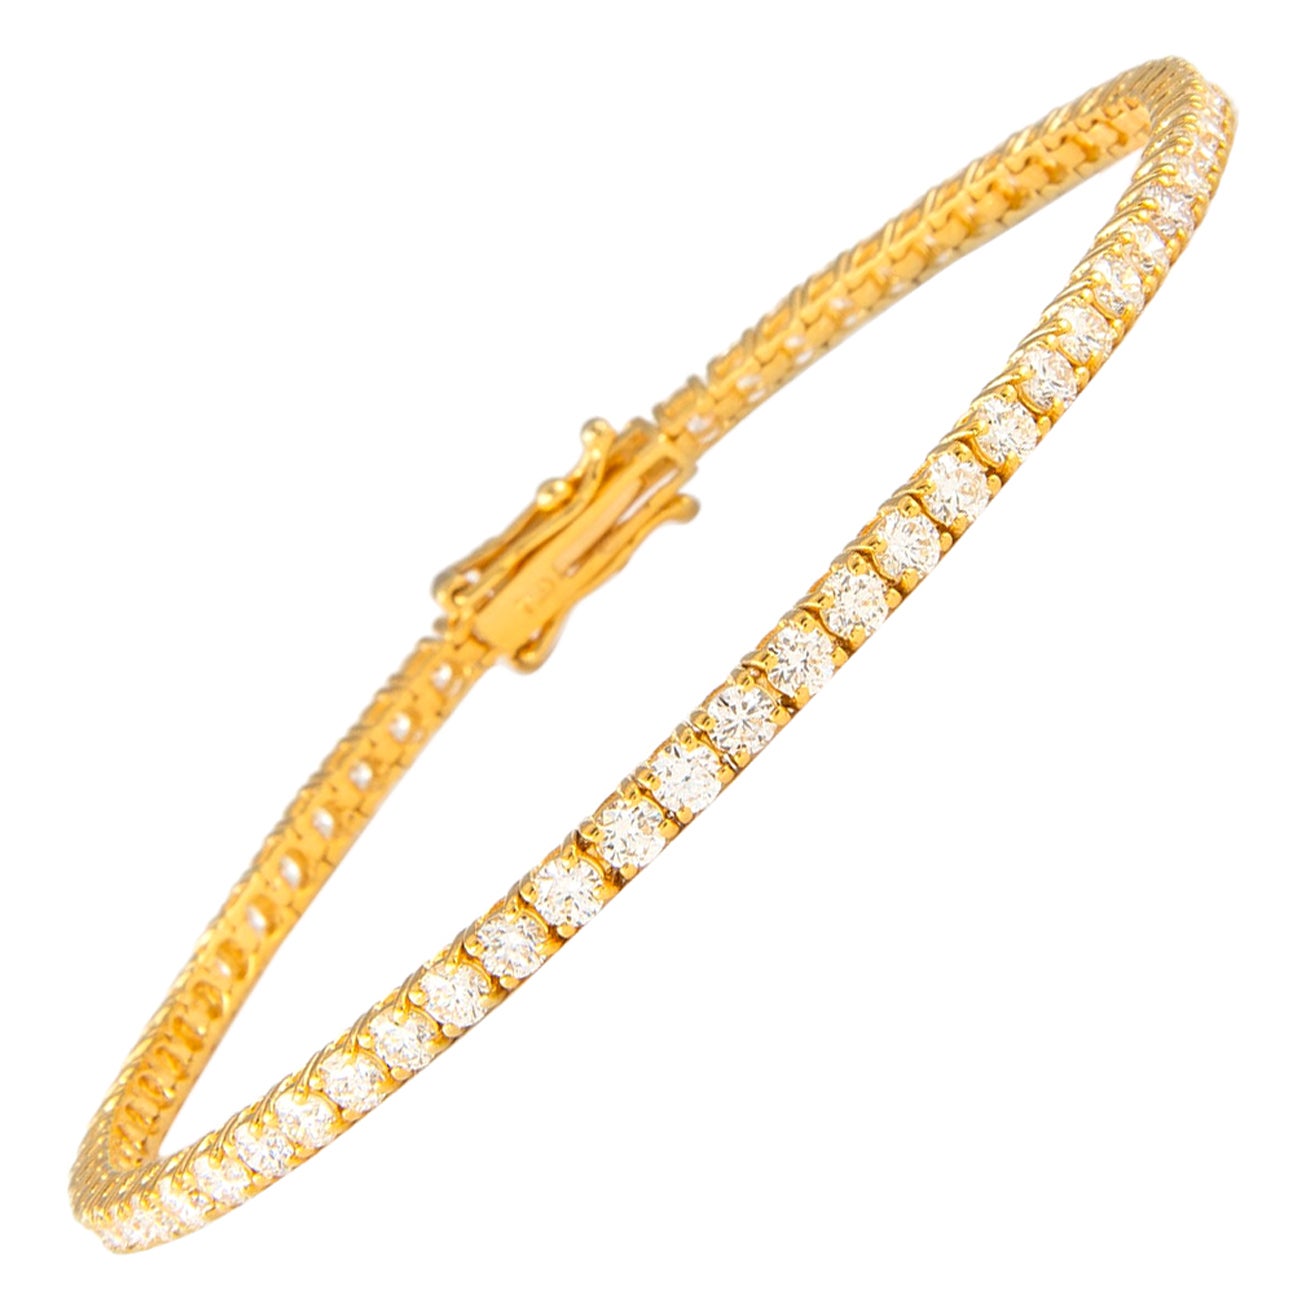 Alexander Bracelet tennis en or jaune 18 carats avec diamants de 3,73 carats